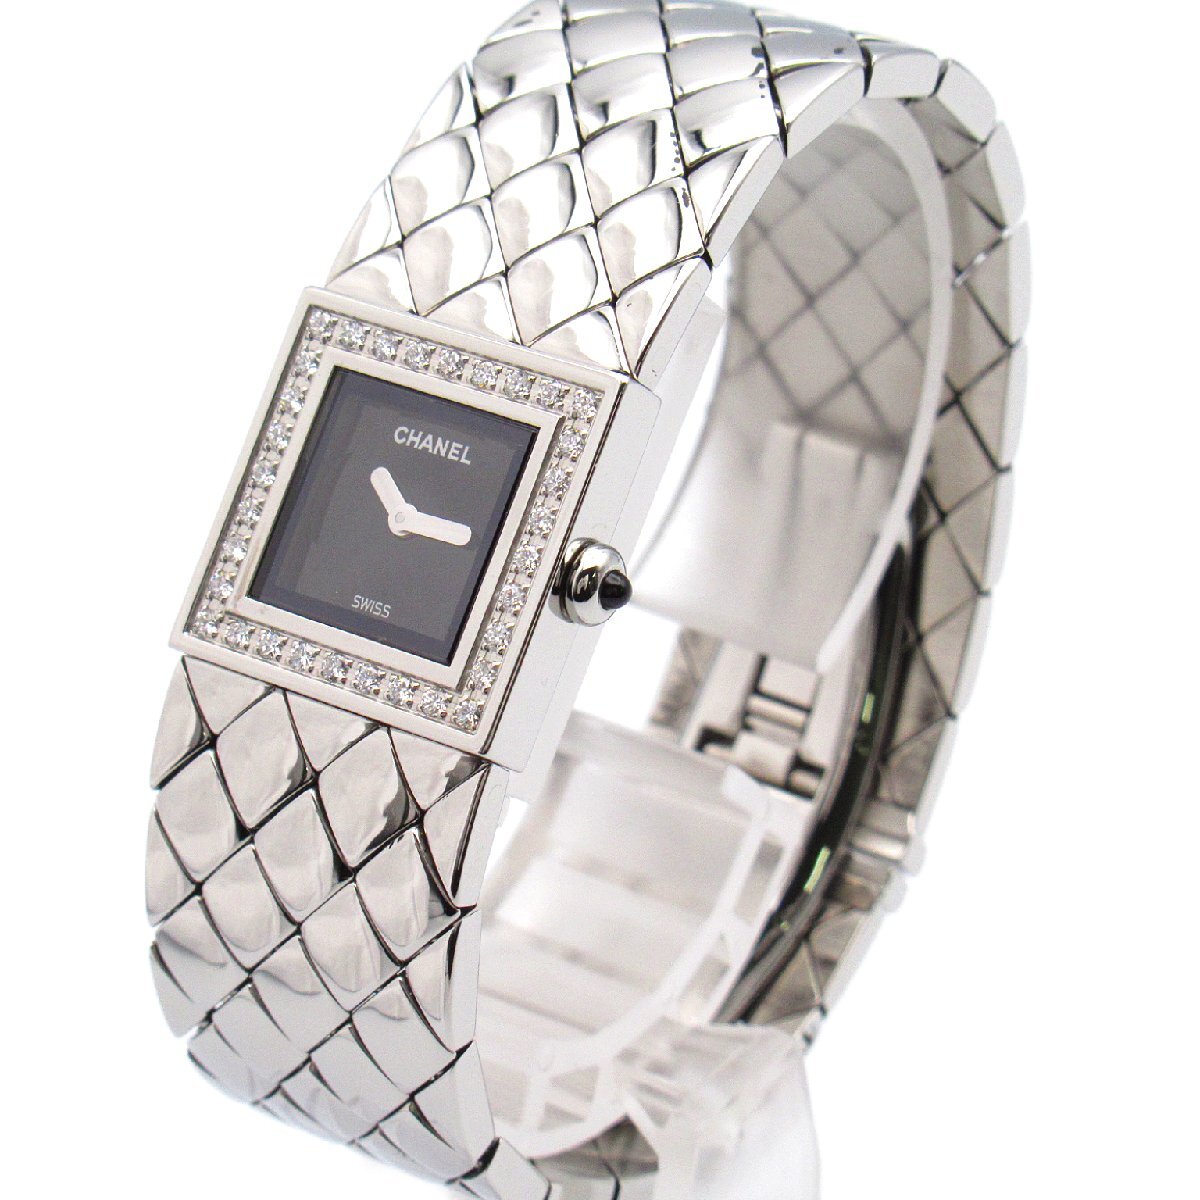  Chanel matelasse diamond bezel brand off CHANEL stainless steel wristwatch SS used lady's 